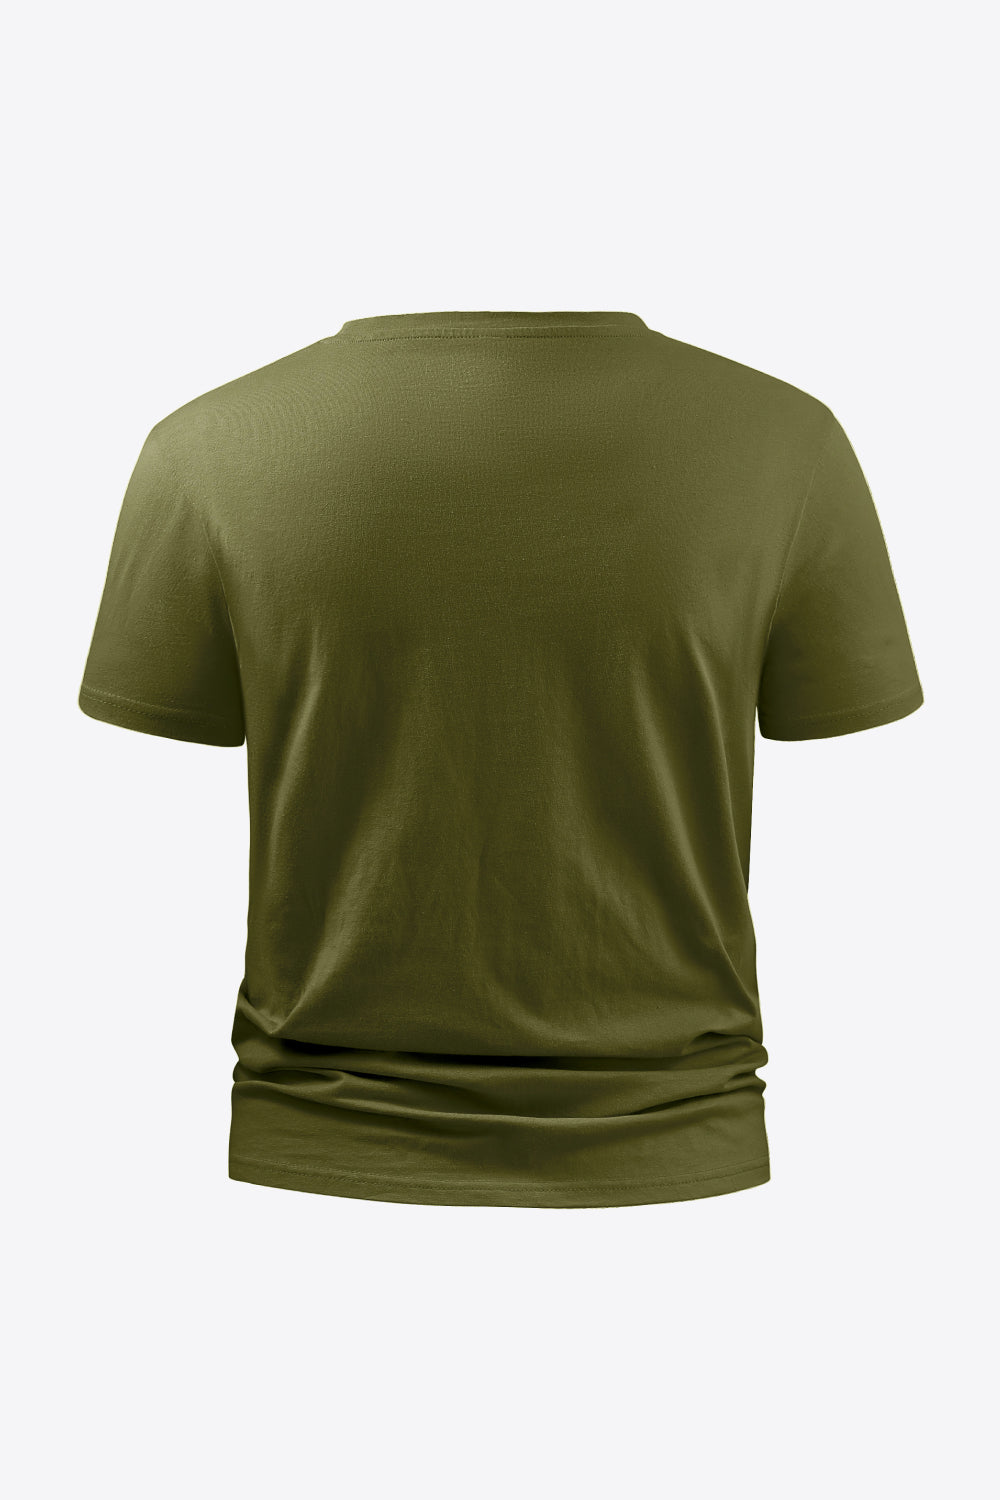 Full Size Graphic Round Neck Short Sleeve Cotton T-Shirt